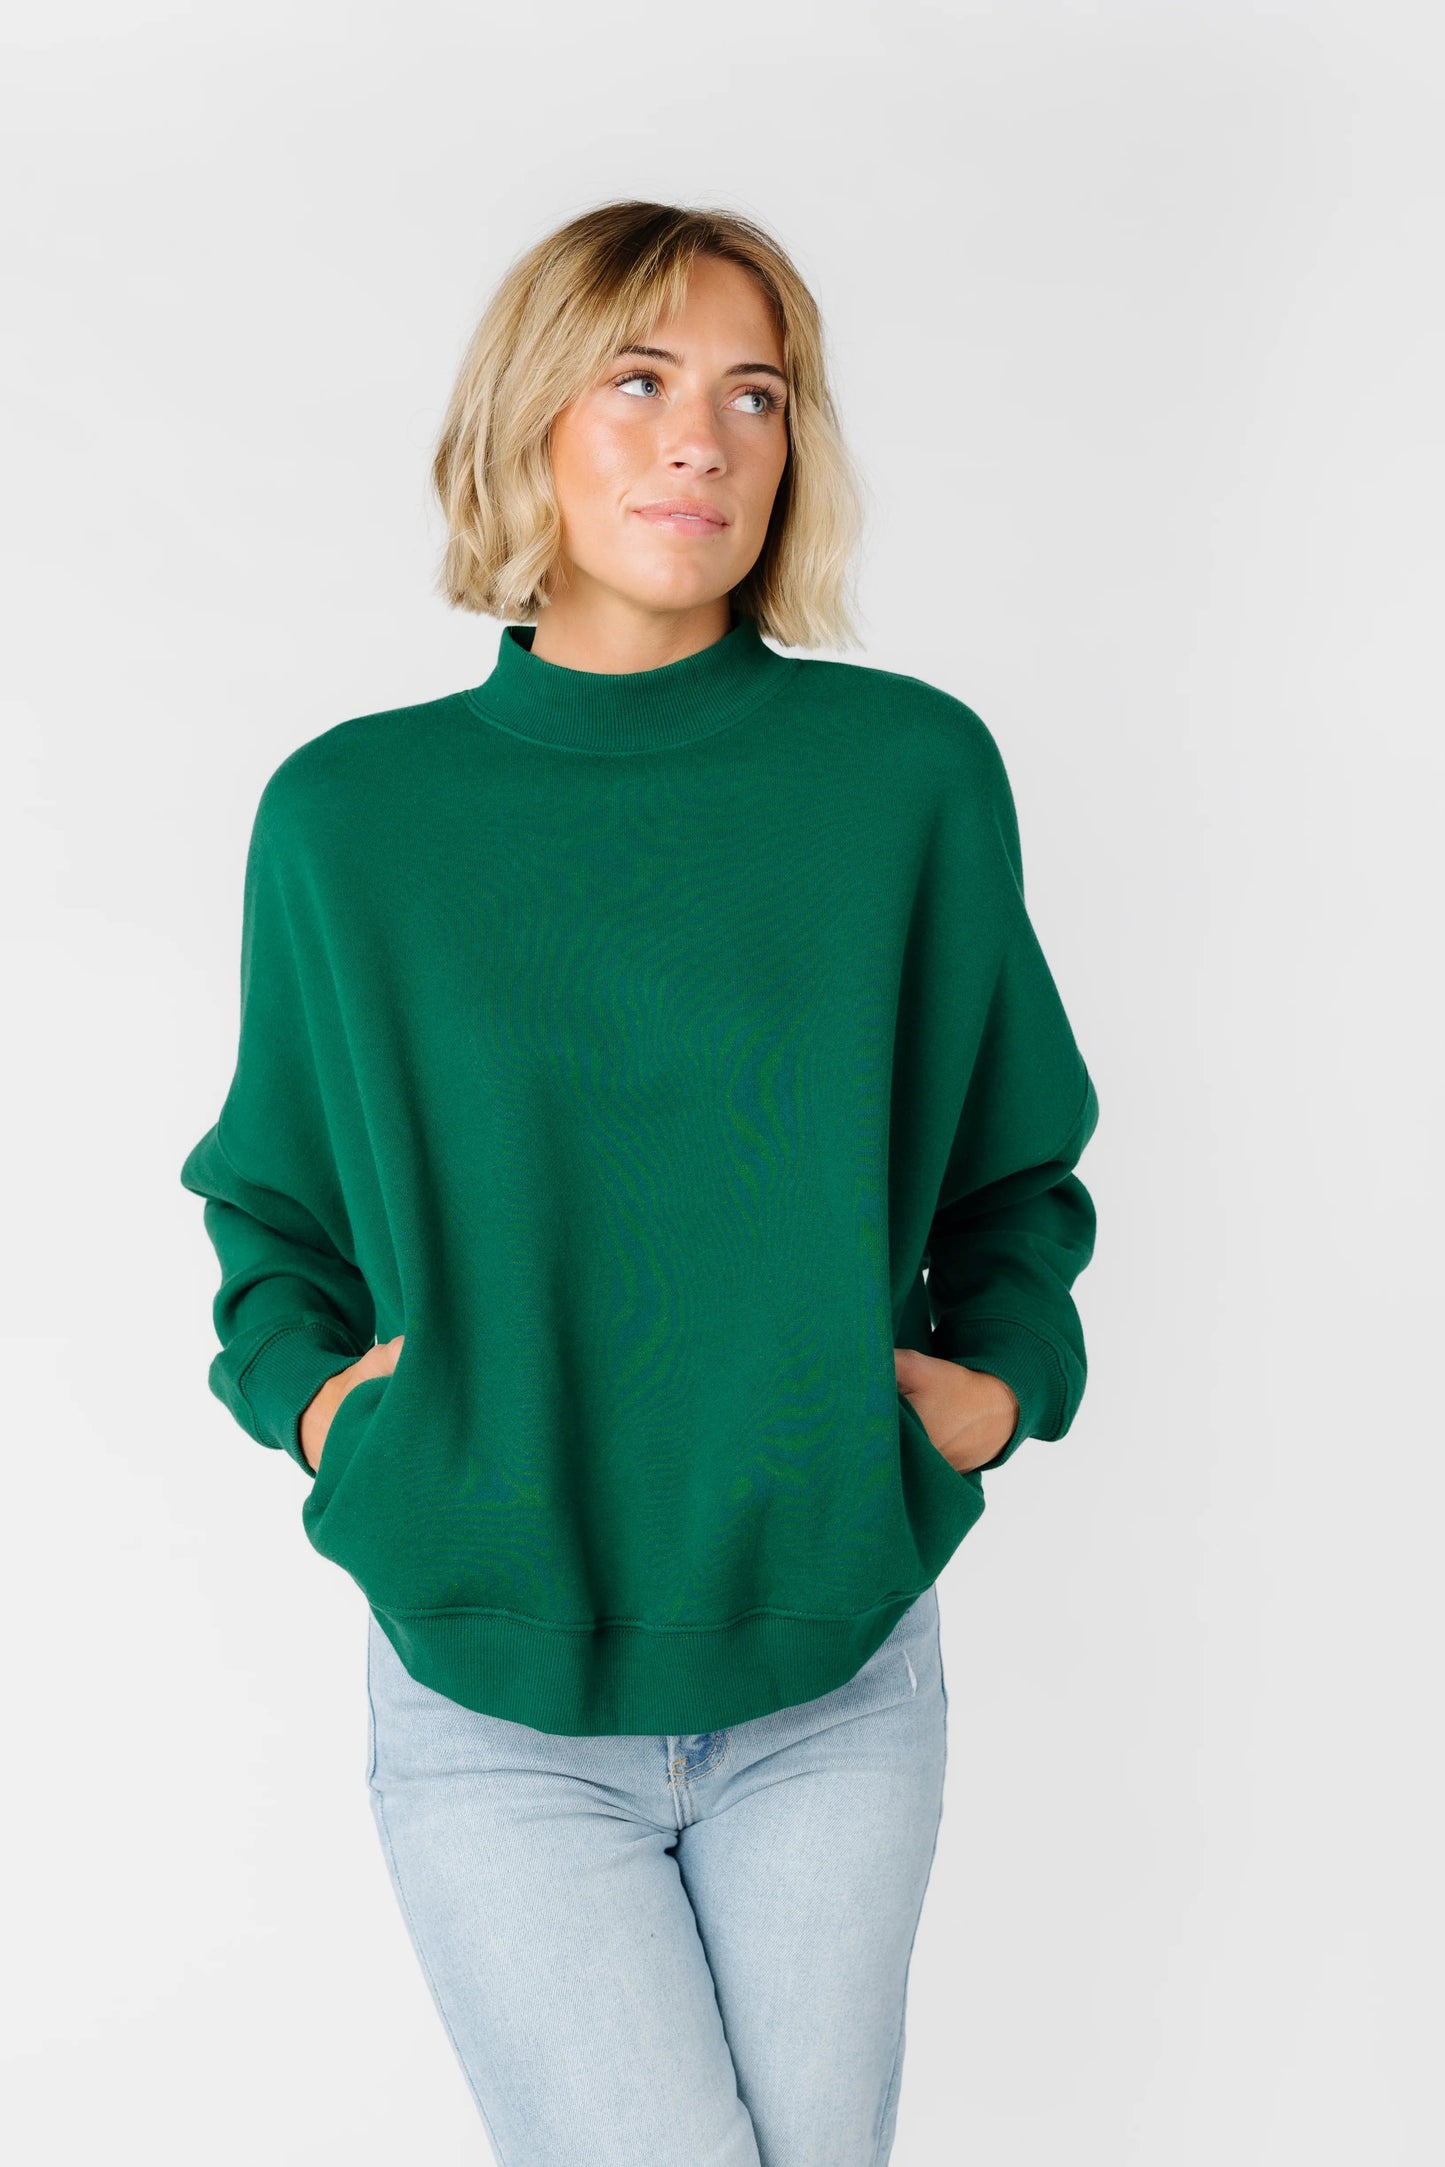 The Troy Sweatshirt - Stores only WOMEN'S SWEATSHIRT Mod Ref 